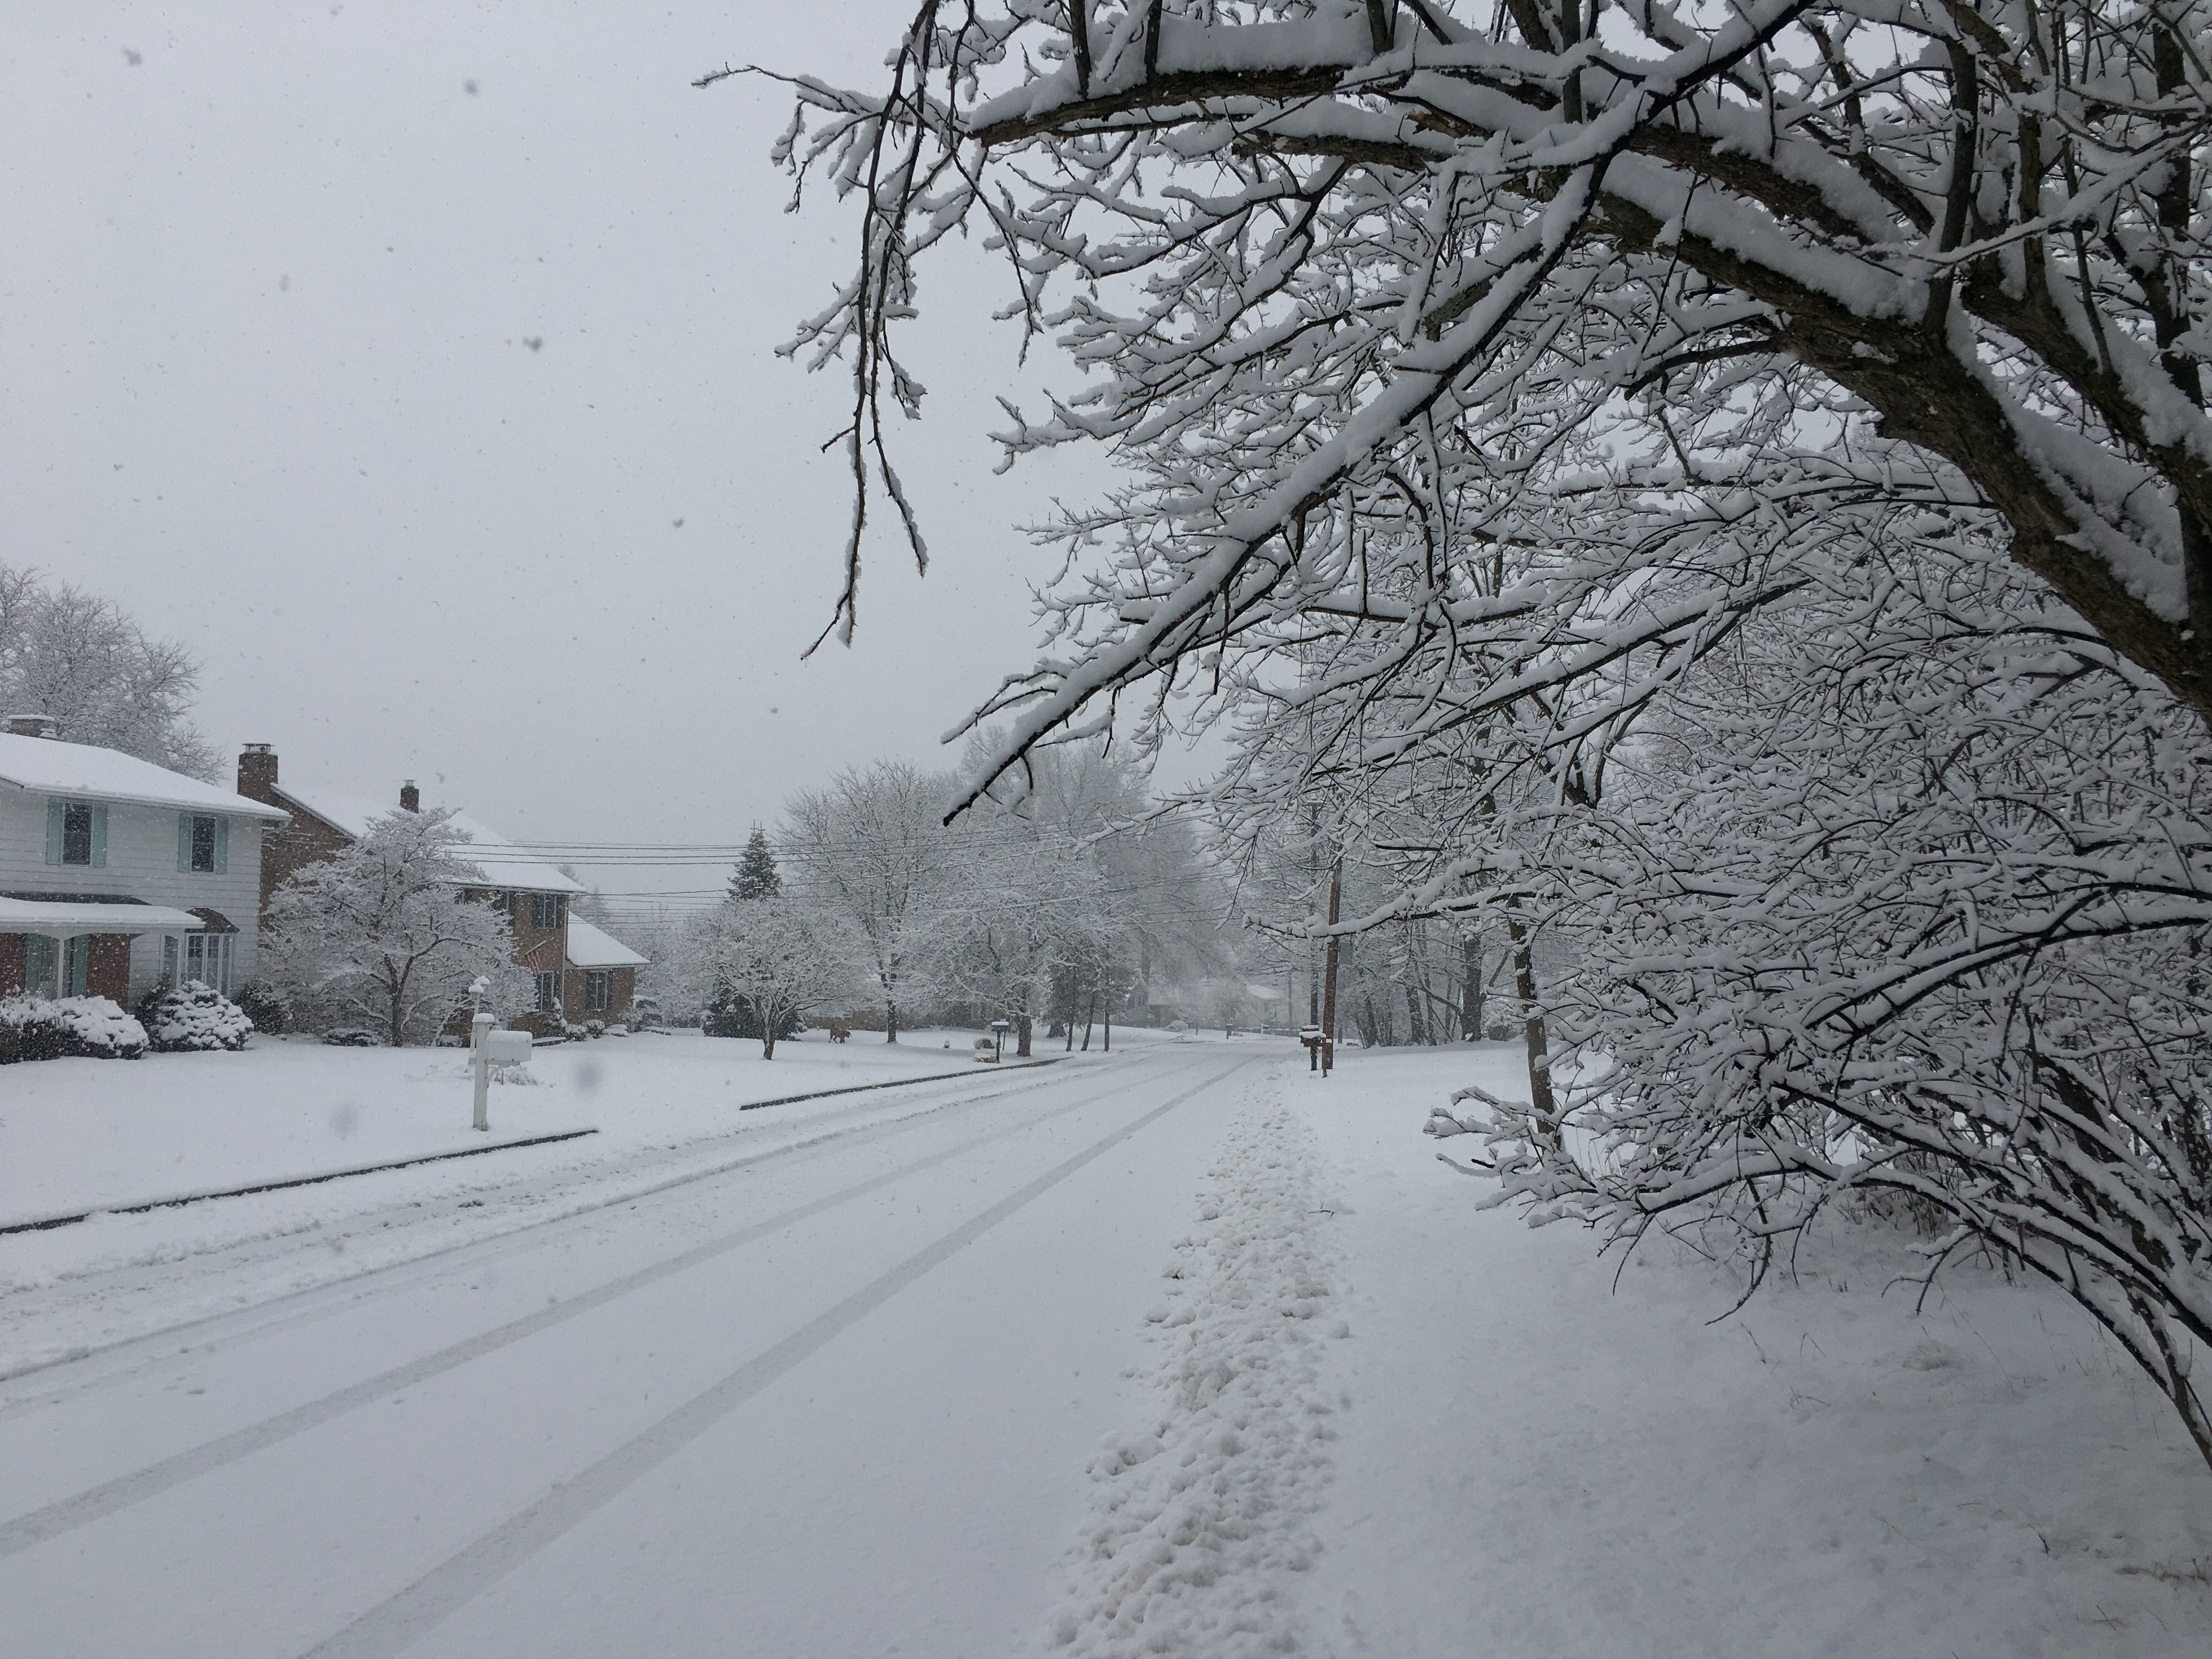 Landscape shot of a snowy road in Binghamton, New York